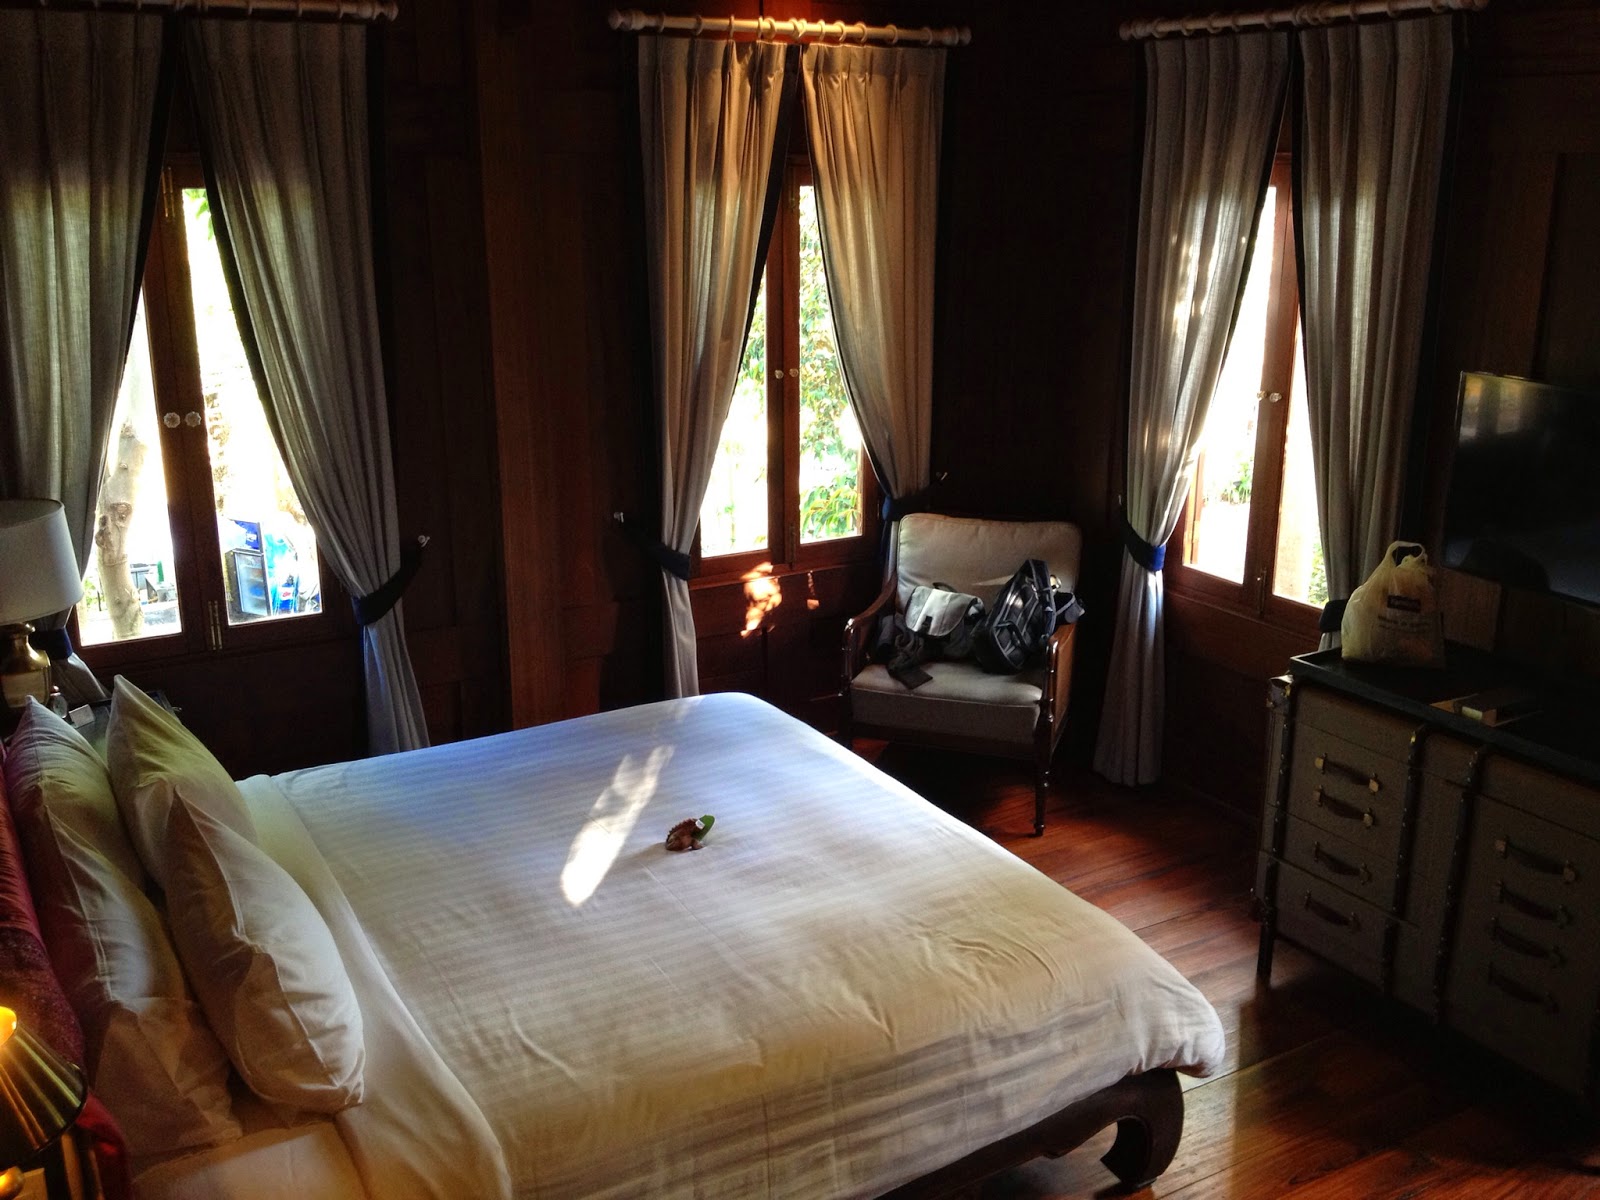 Luang Prabang - Our room at the Burasari Heritage